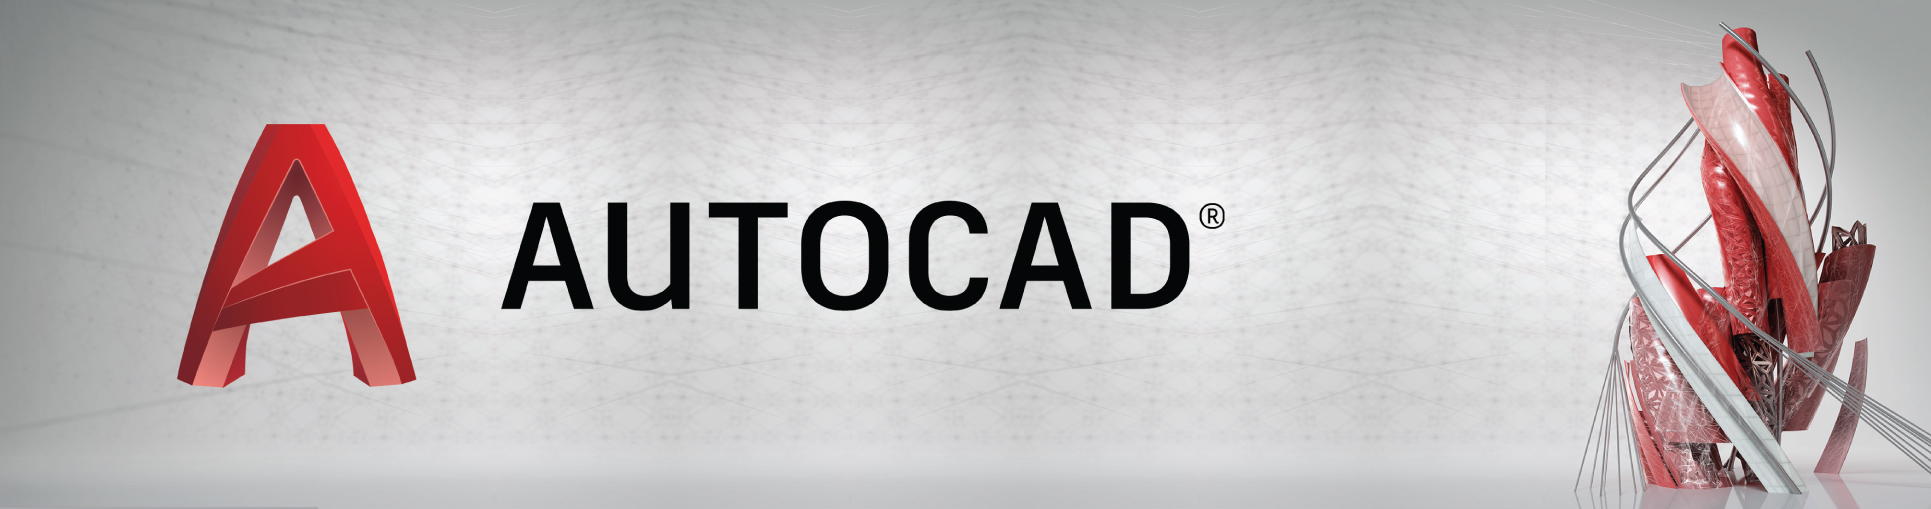 AutoCAD-1